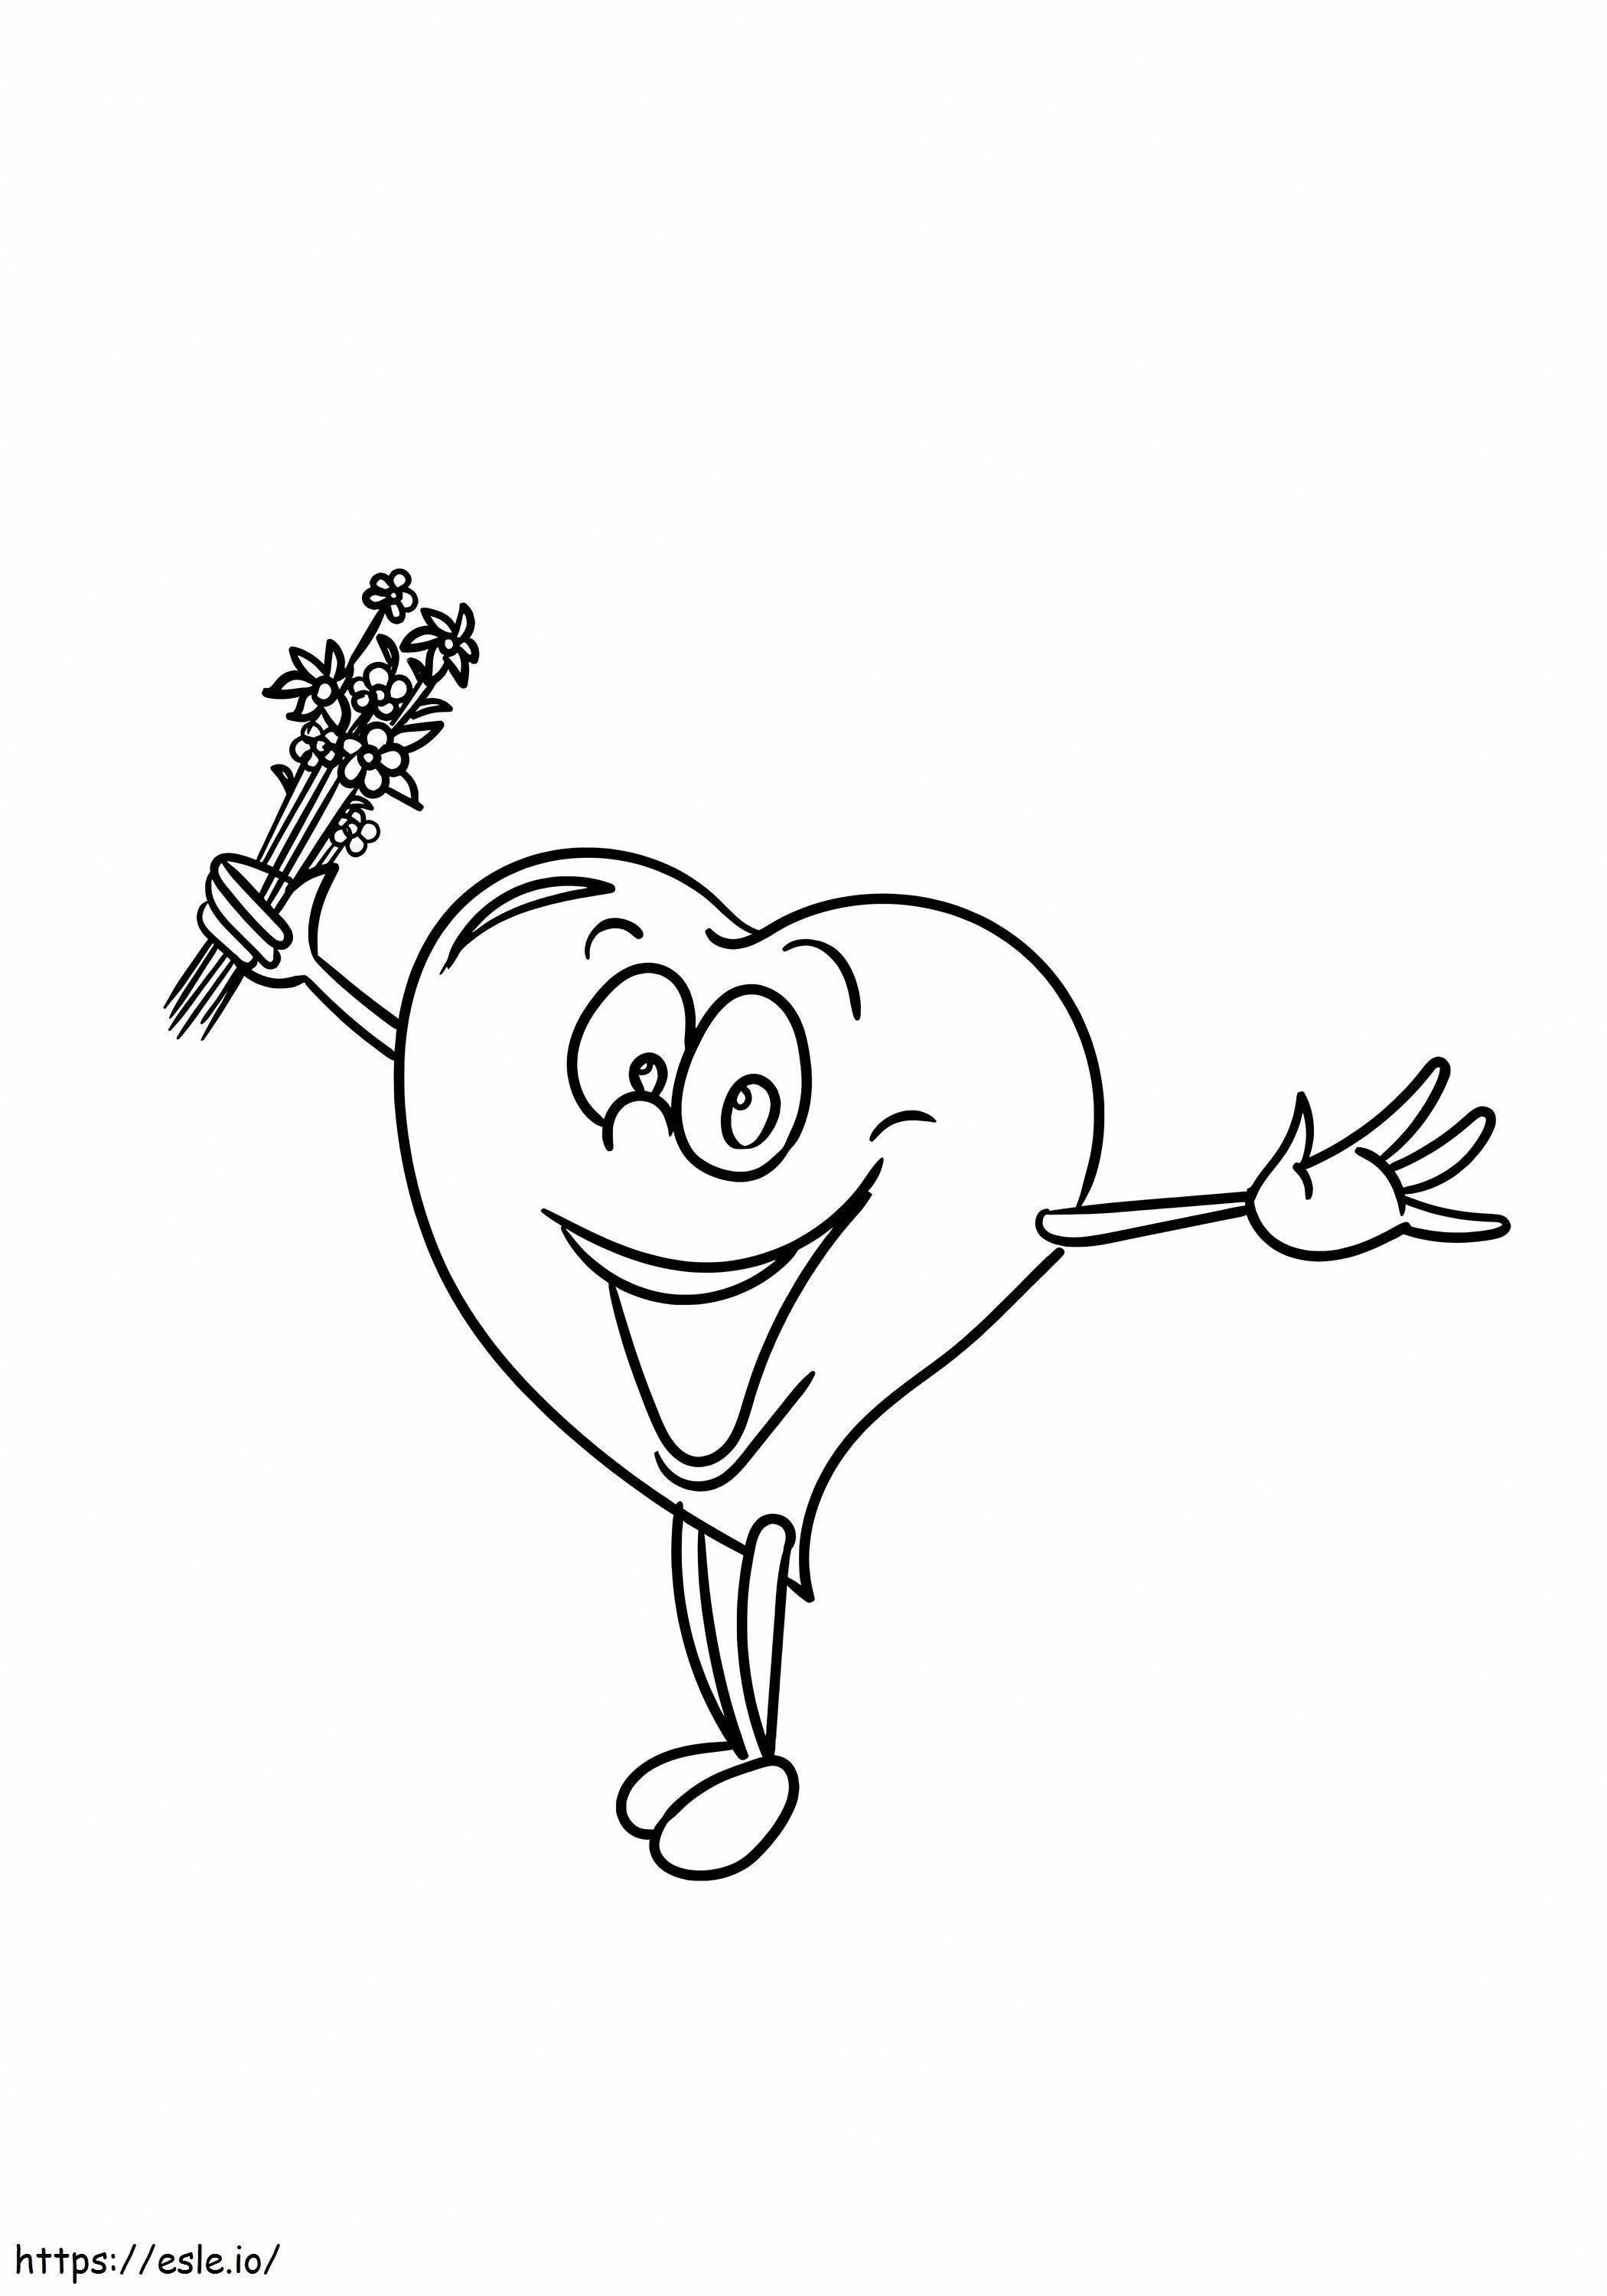 Szczęśliwe serce z kreskówek kolorowanka